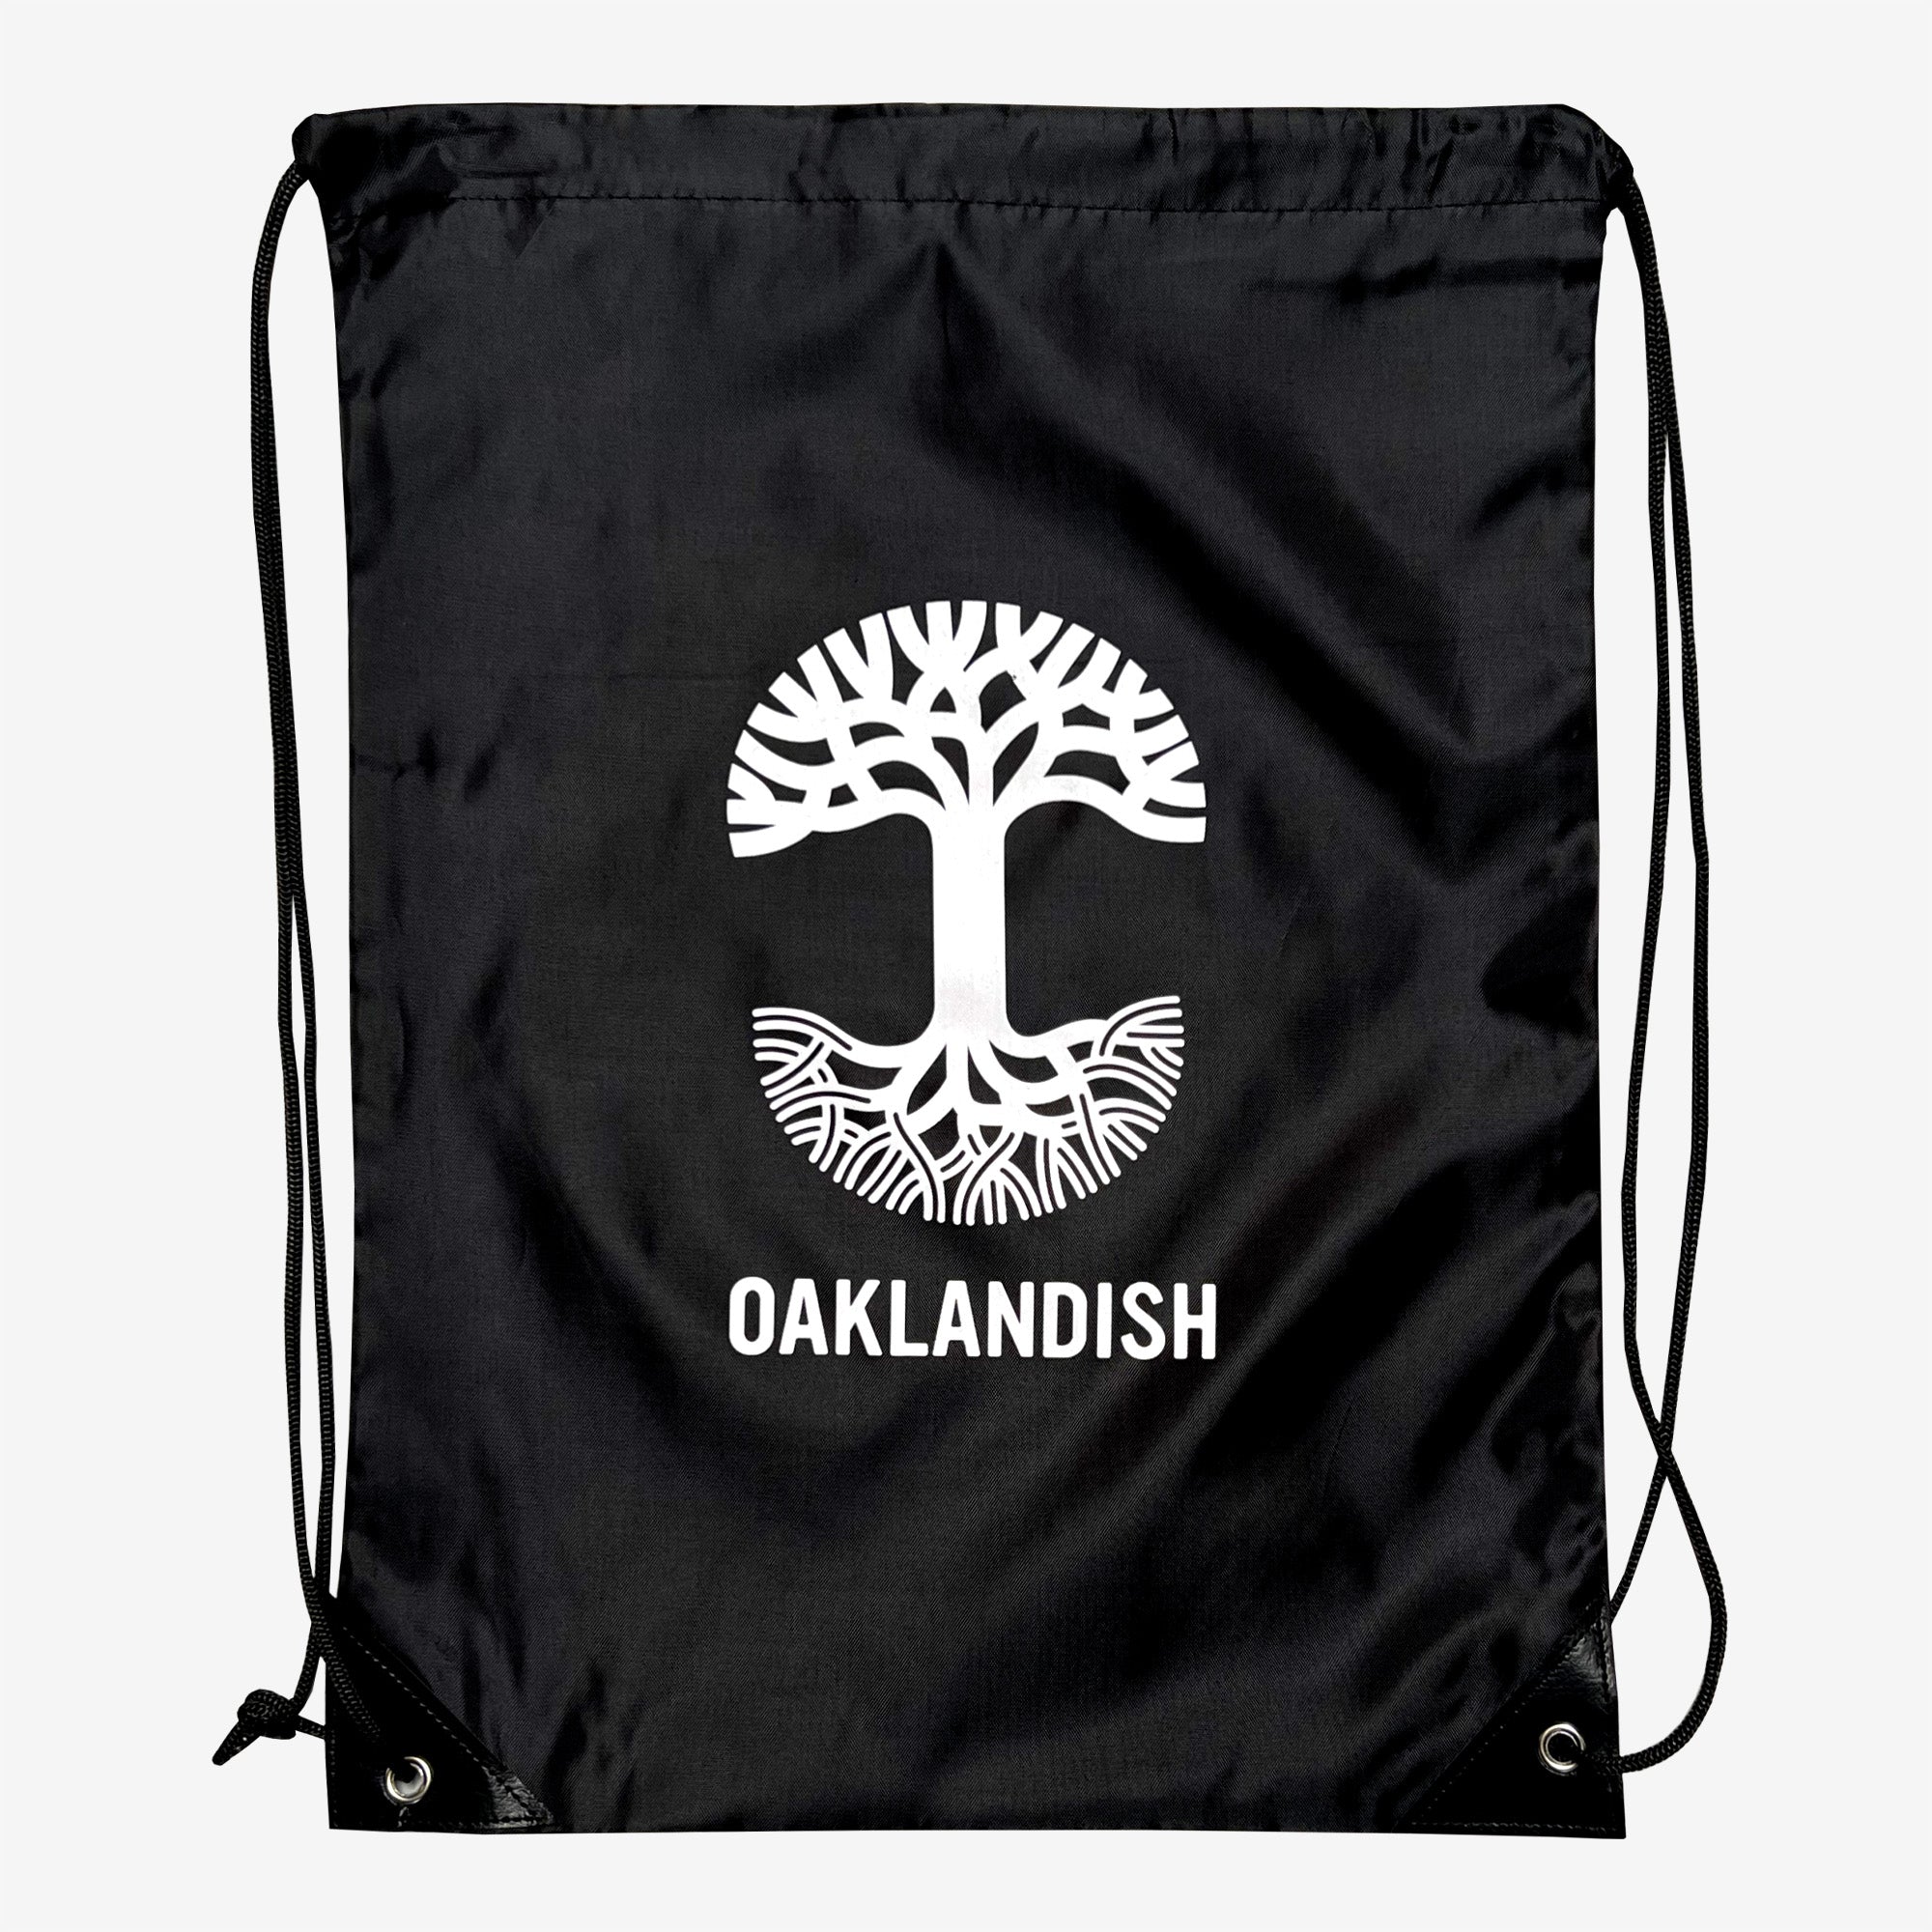 Black polyester drawstring cinch bag with white Oaklandish tree logo and wordmark.